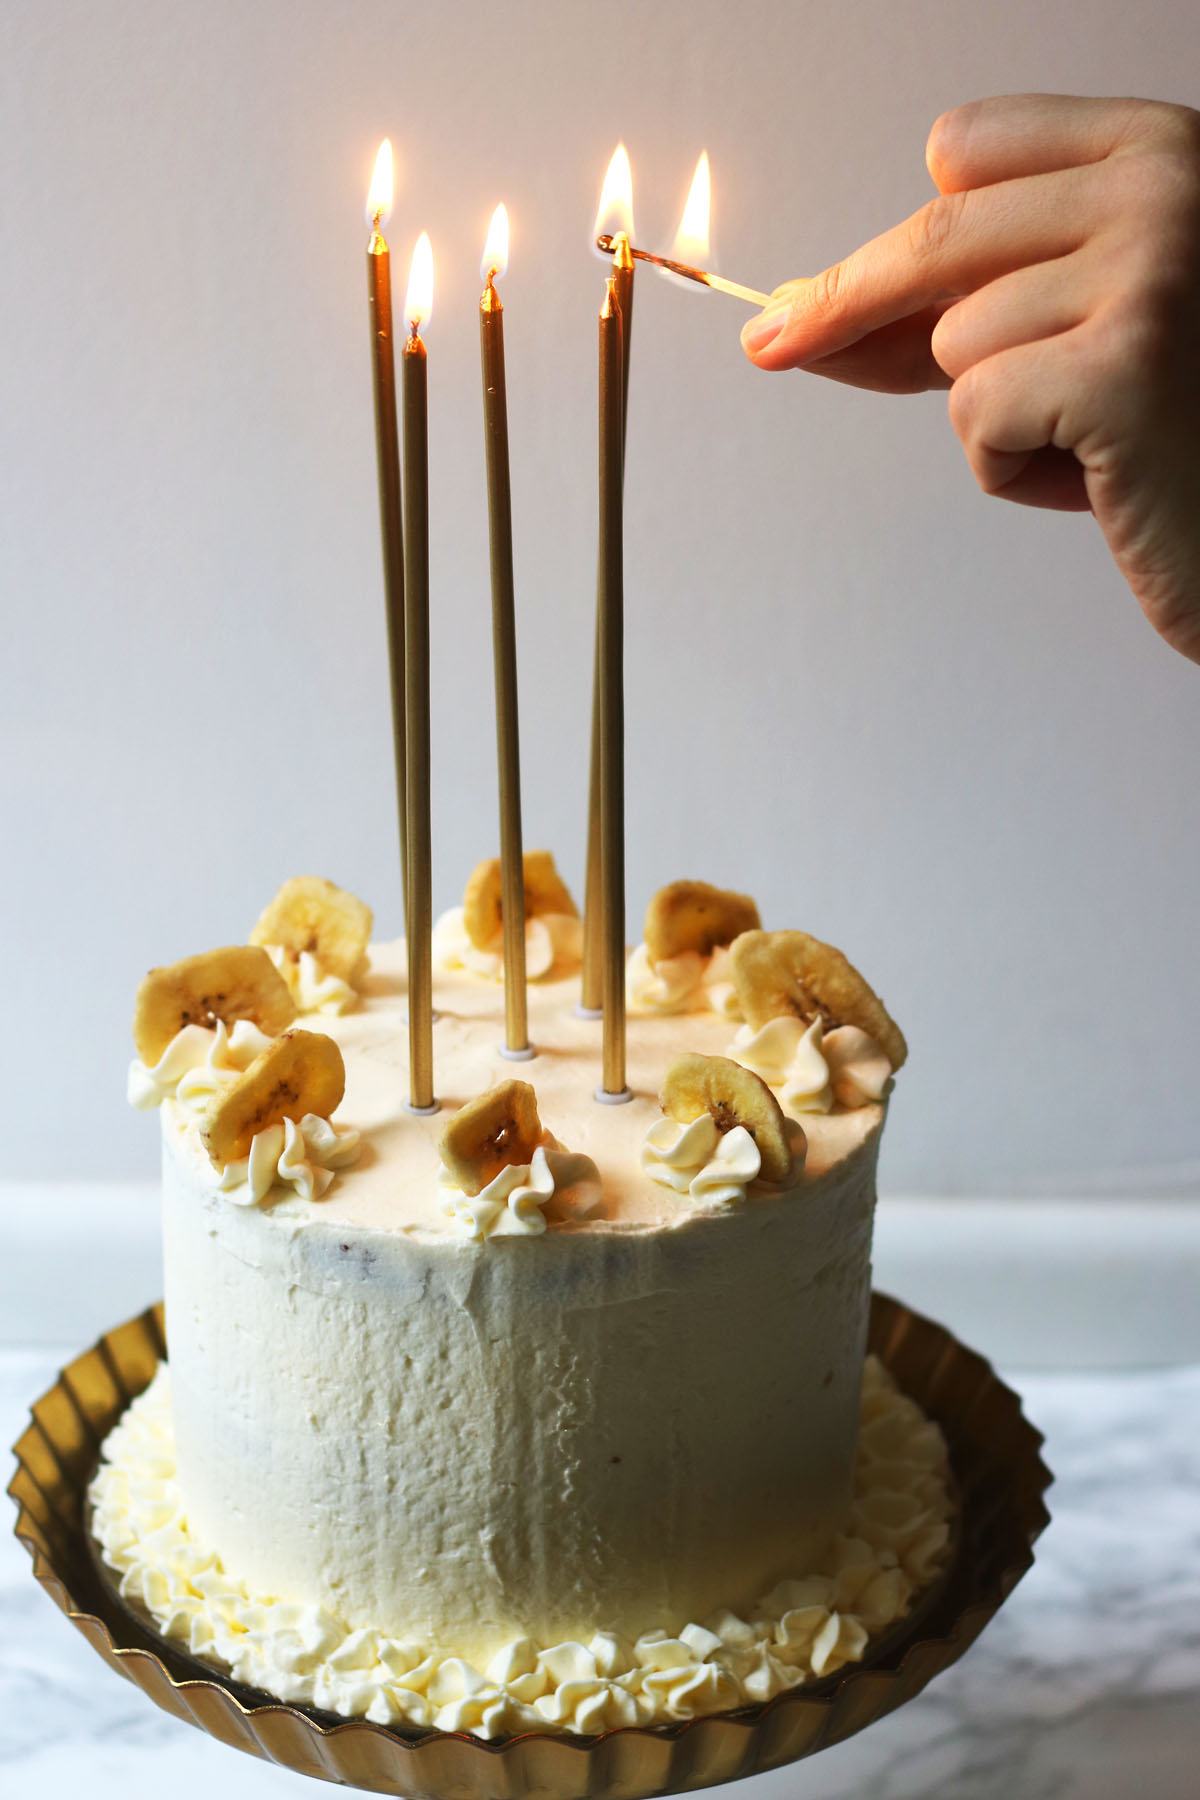 Lighting the candles on my Banana Cream Cake for my birthday